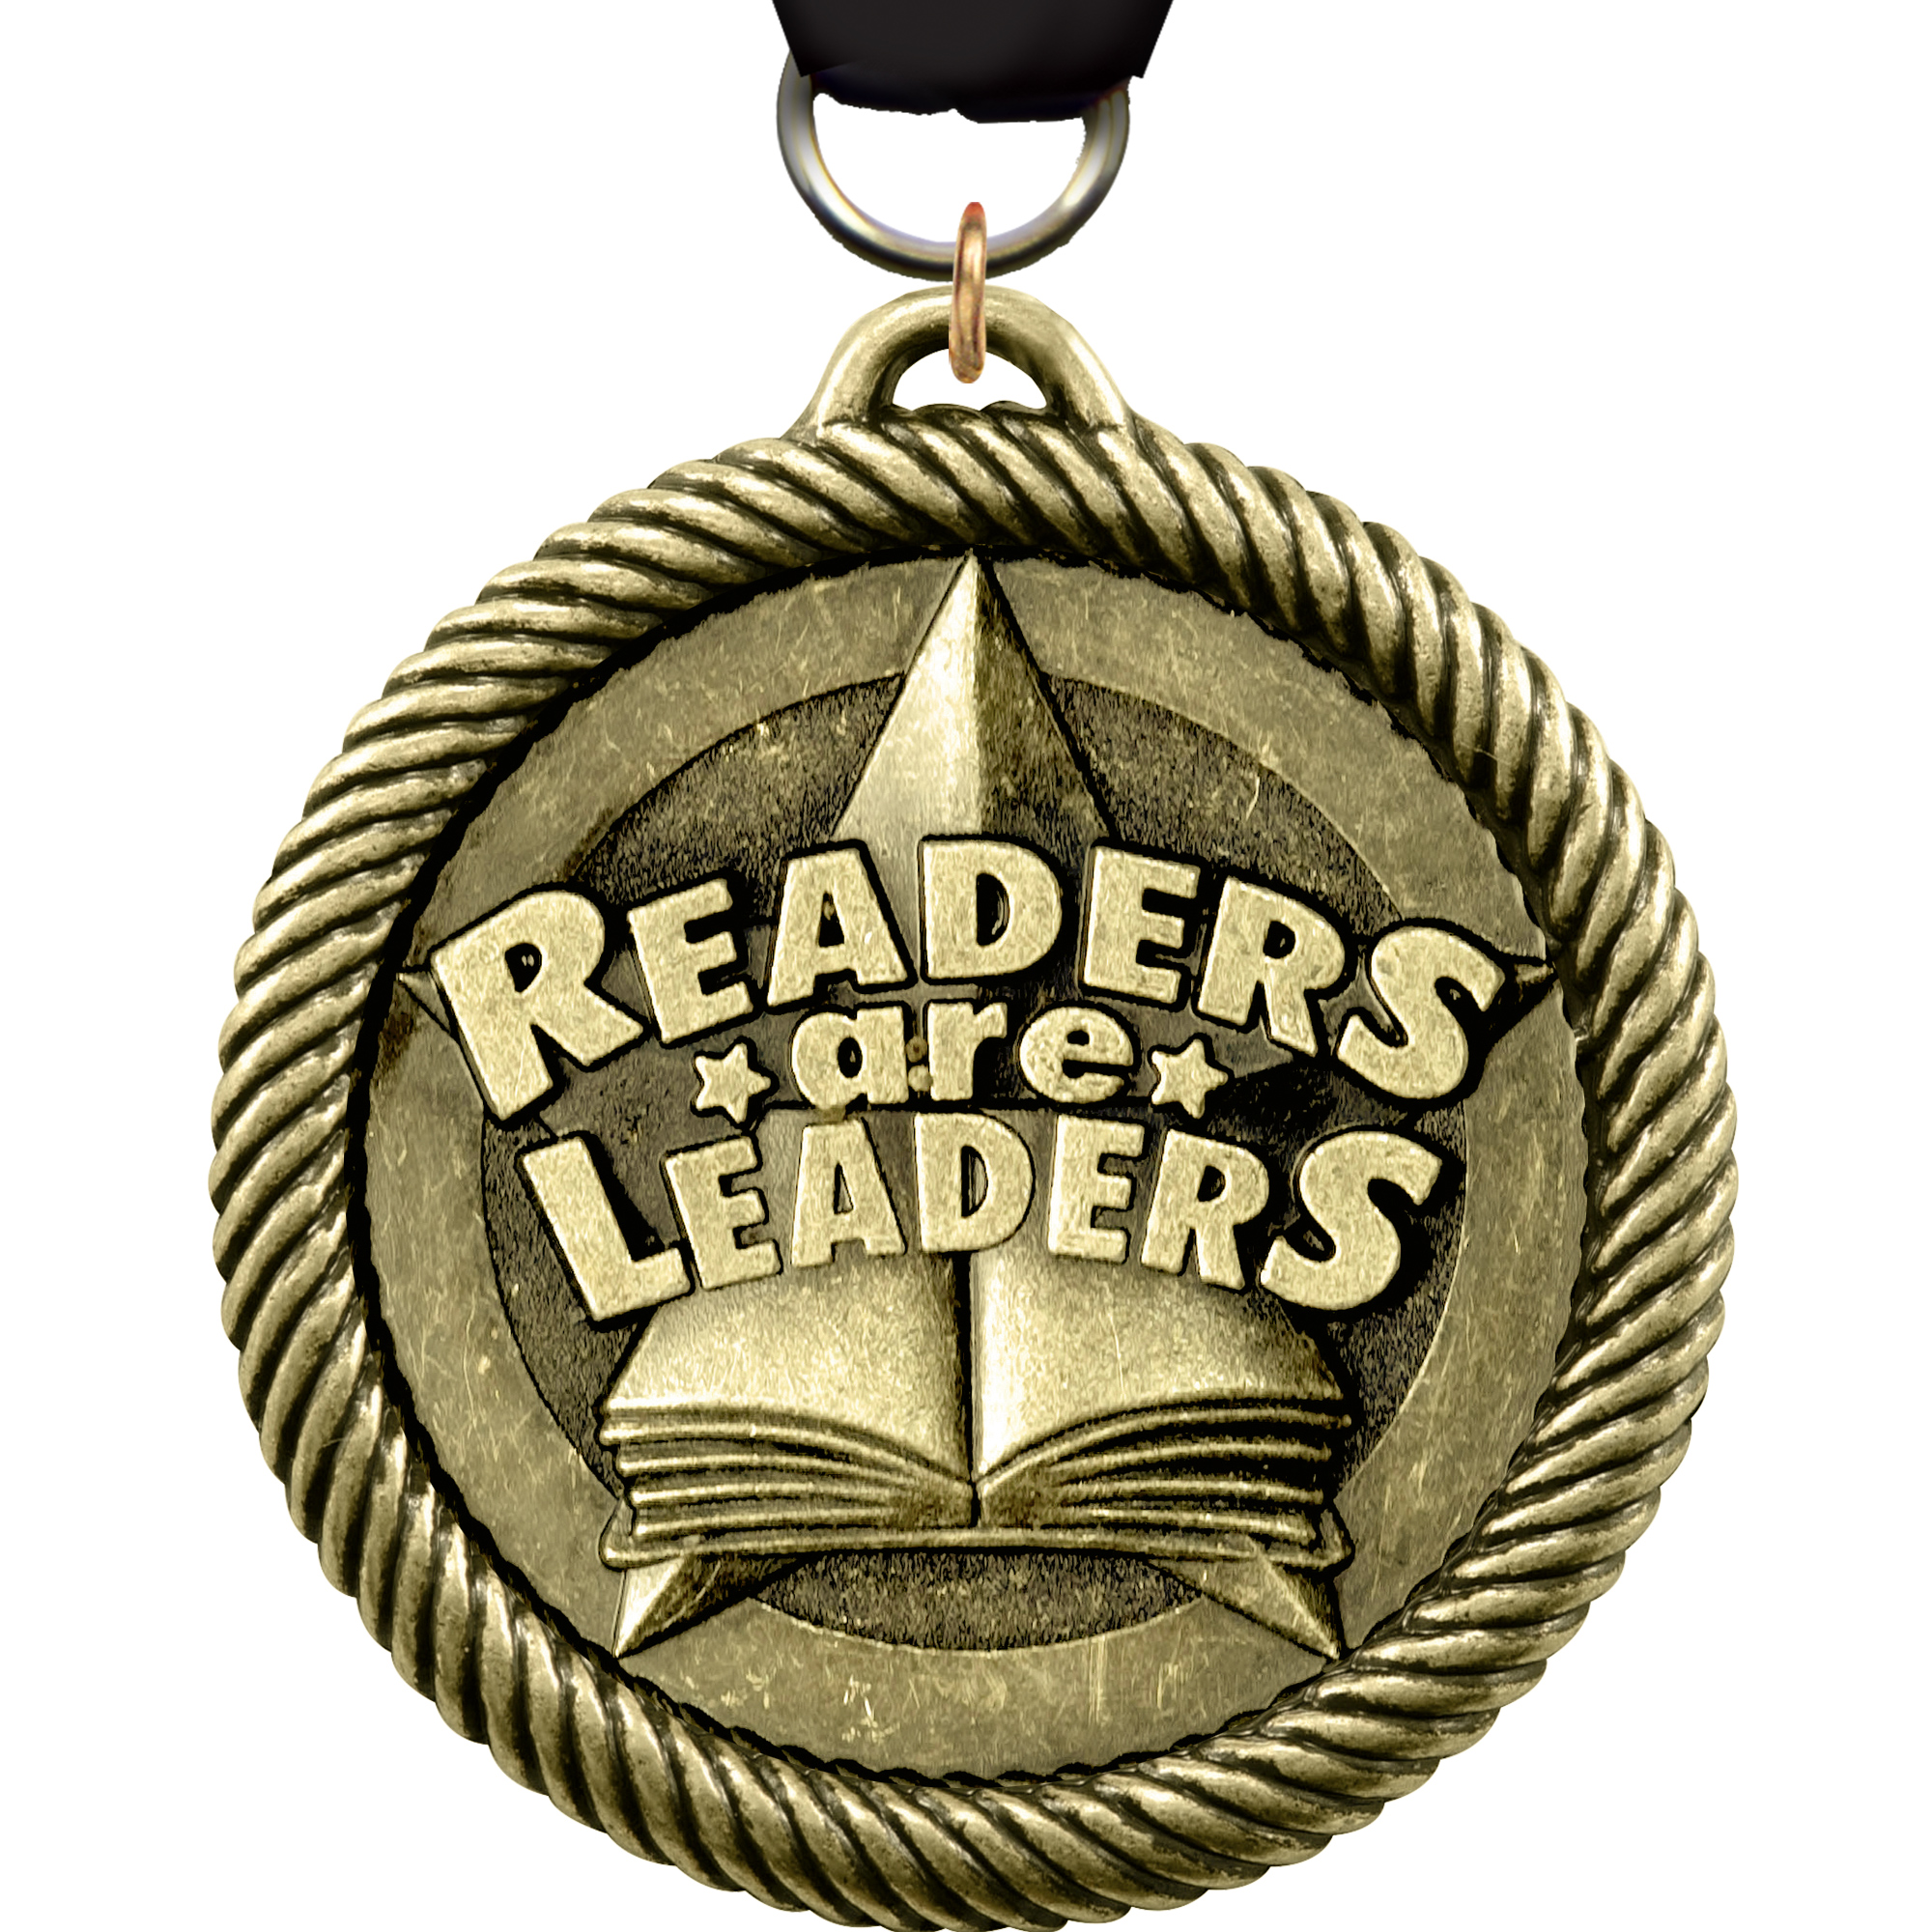 Readers are Leaders Scholastic Medal